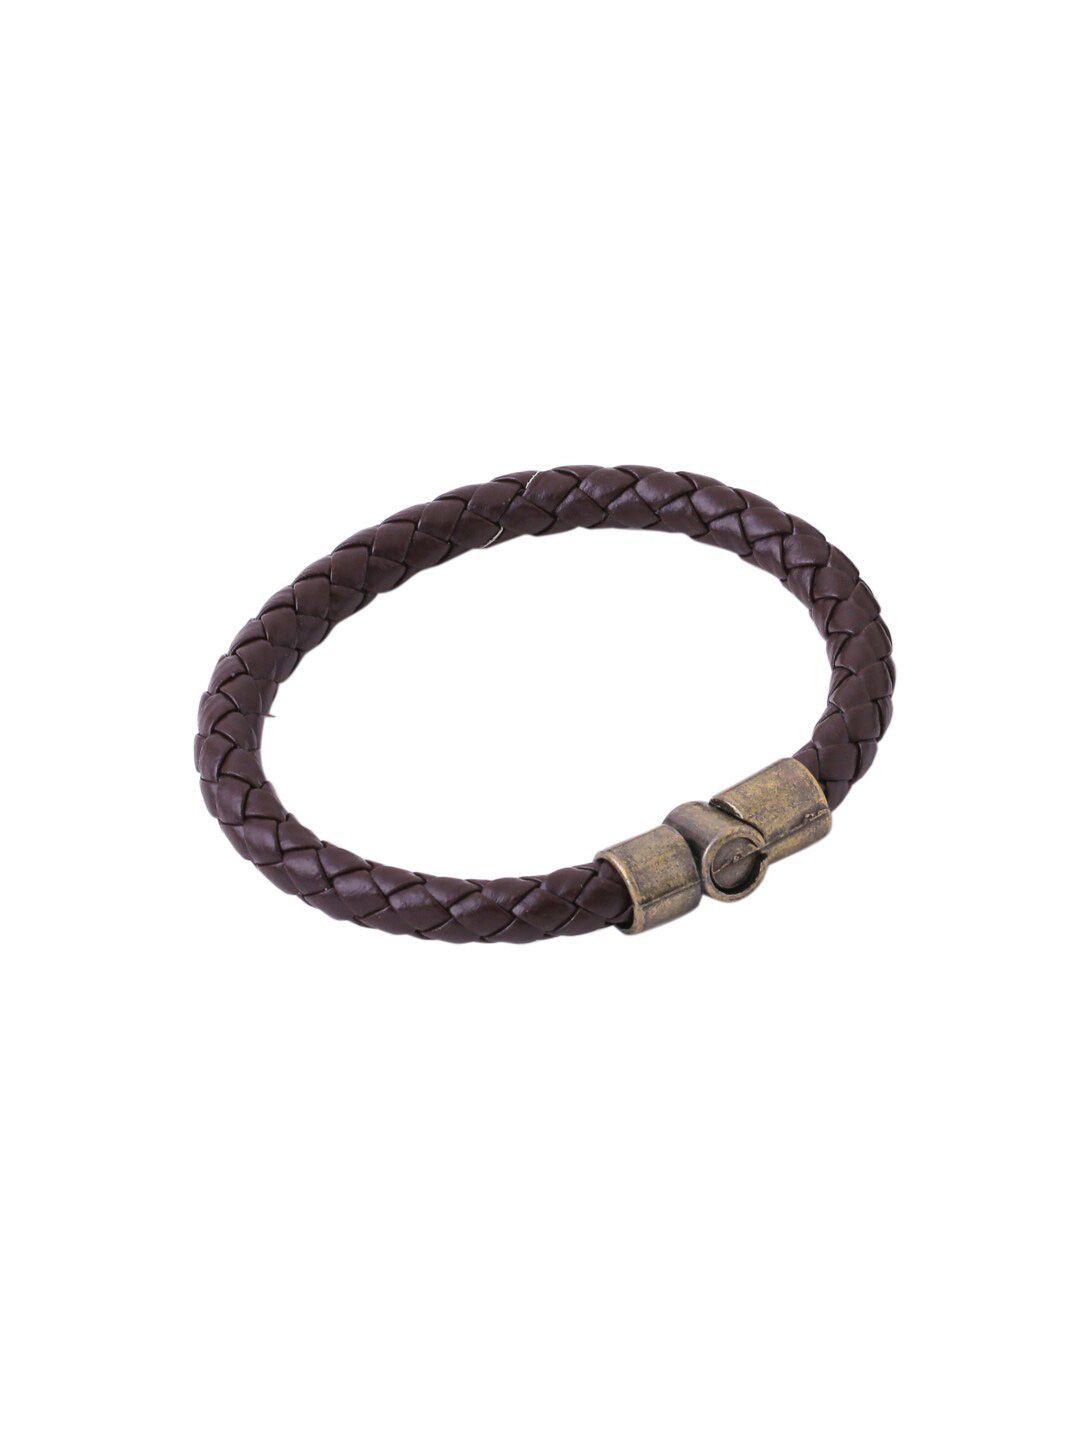 nvr unisex brown leather wraparound bracelet